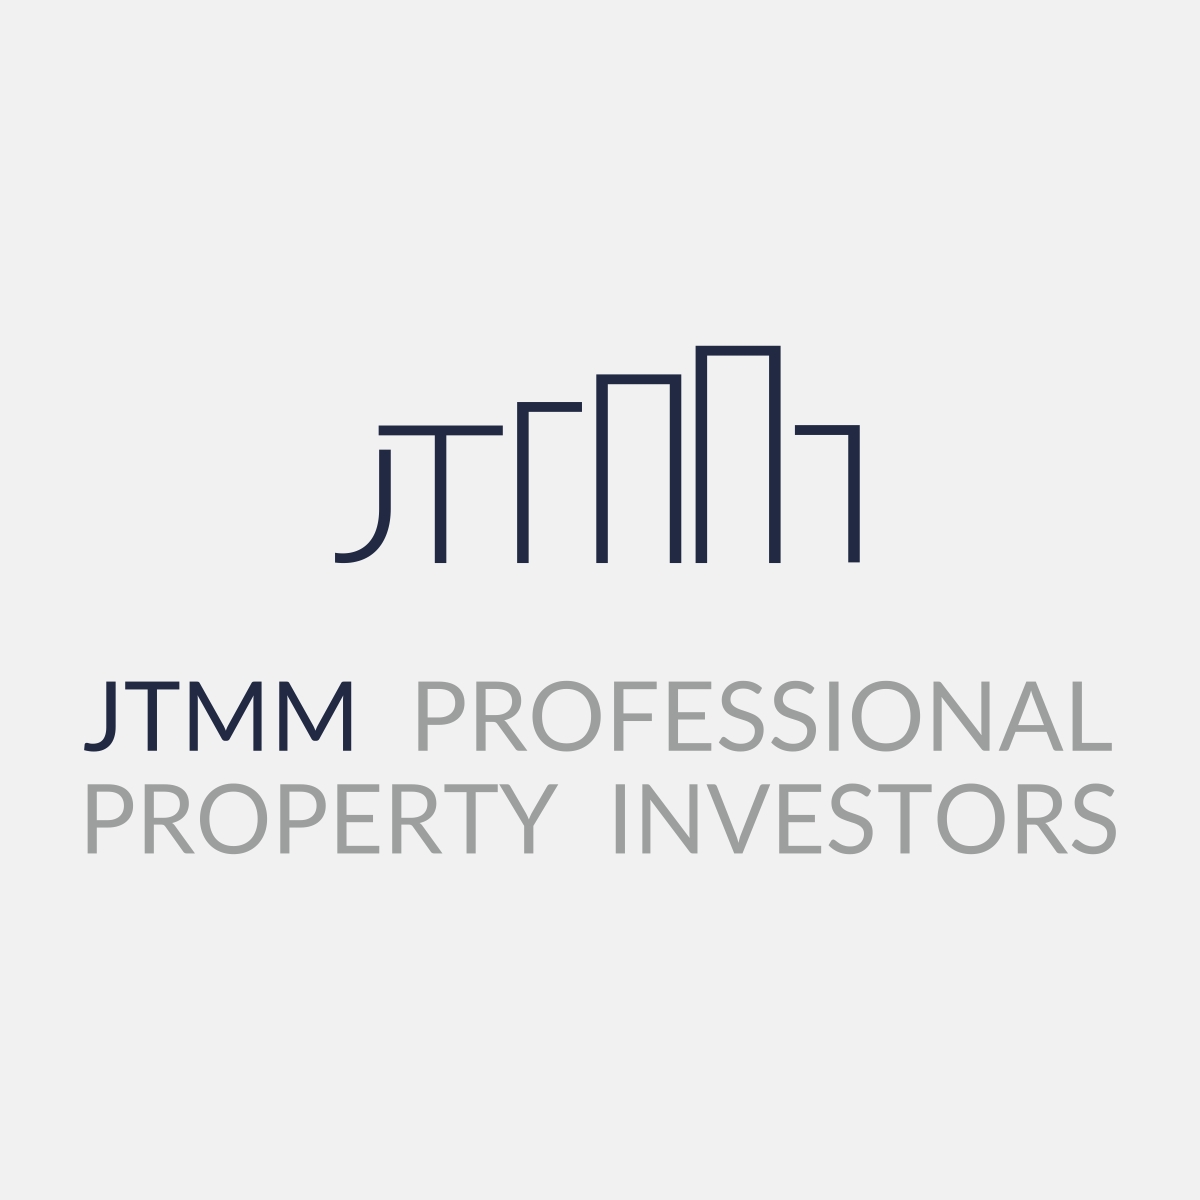 JTMM Professional Property investors